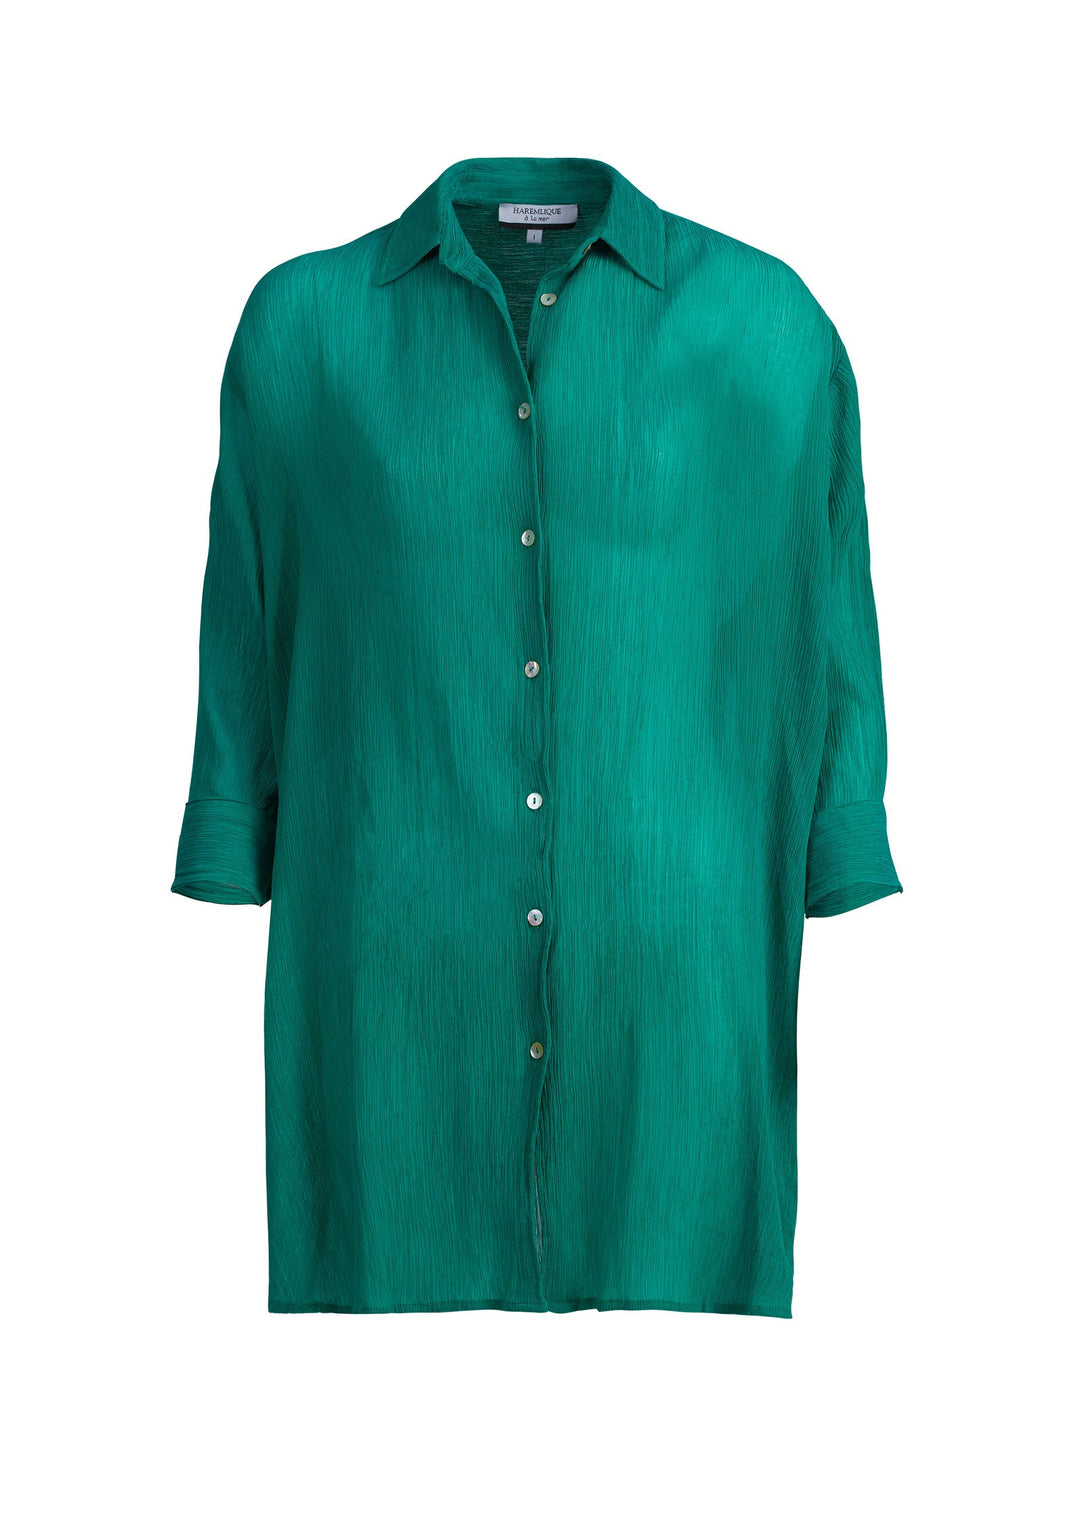 Reef Gömlek Elbise - Yeşil